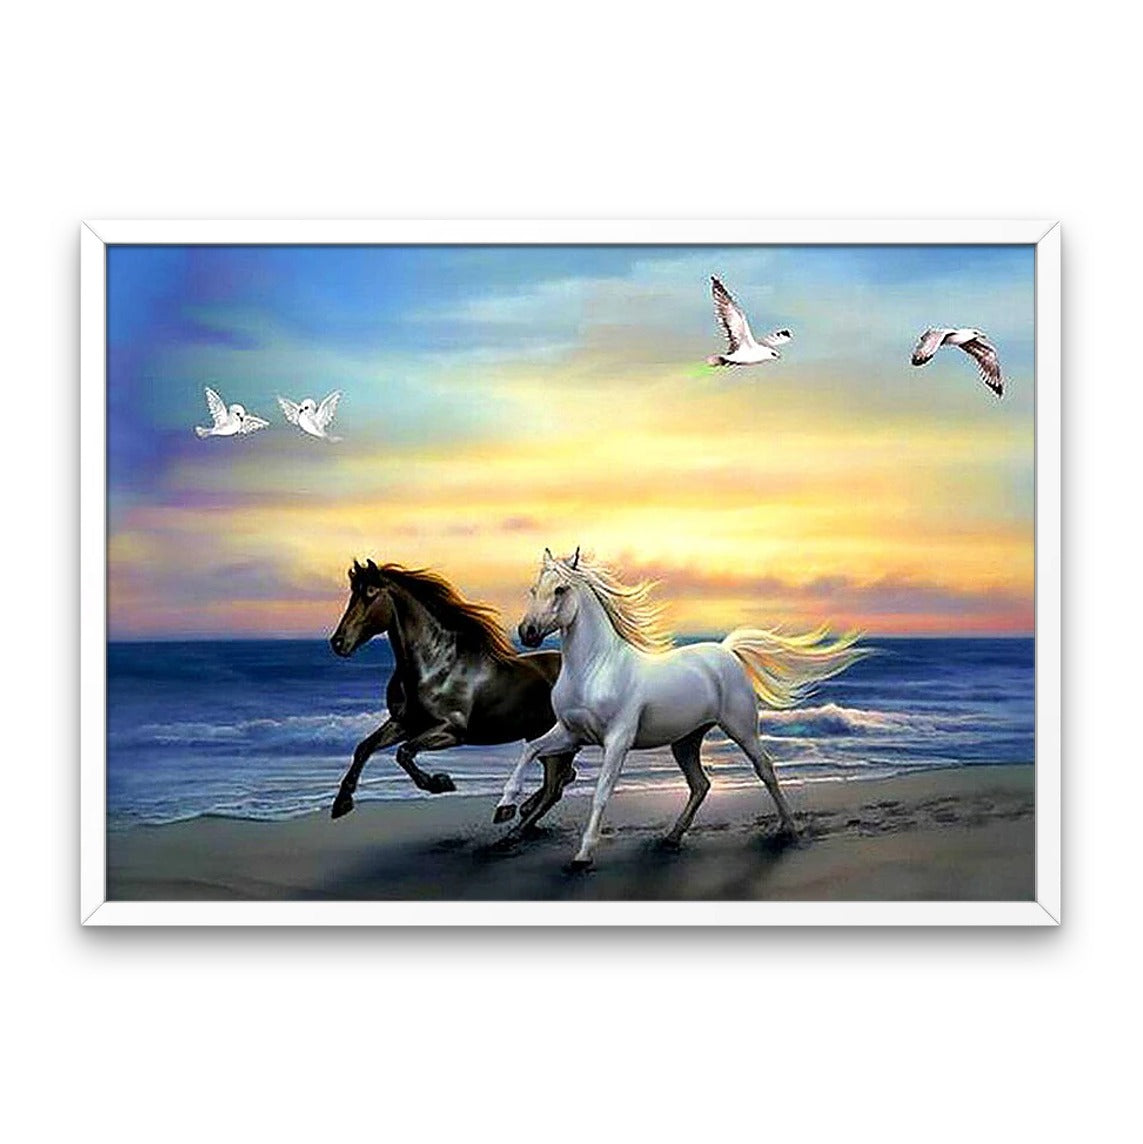 Horses on the Beach - Diamond Painting Kit